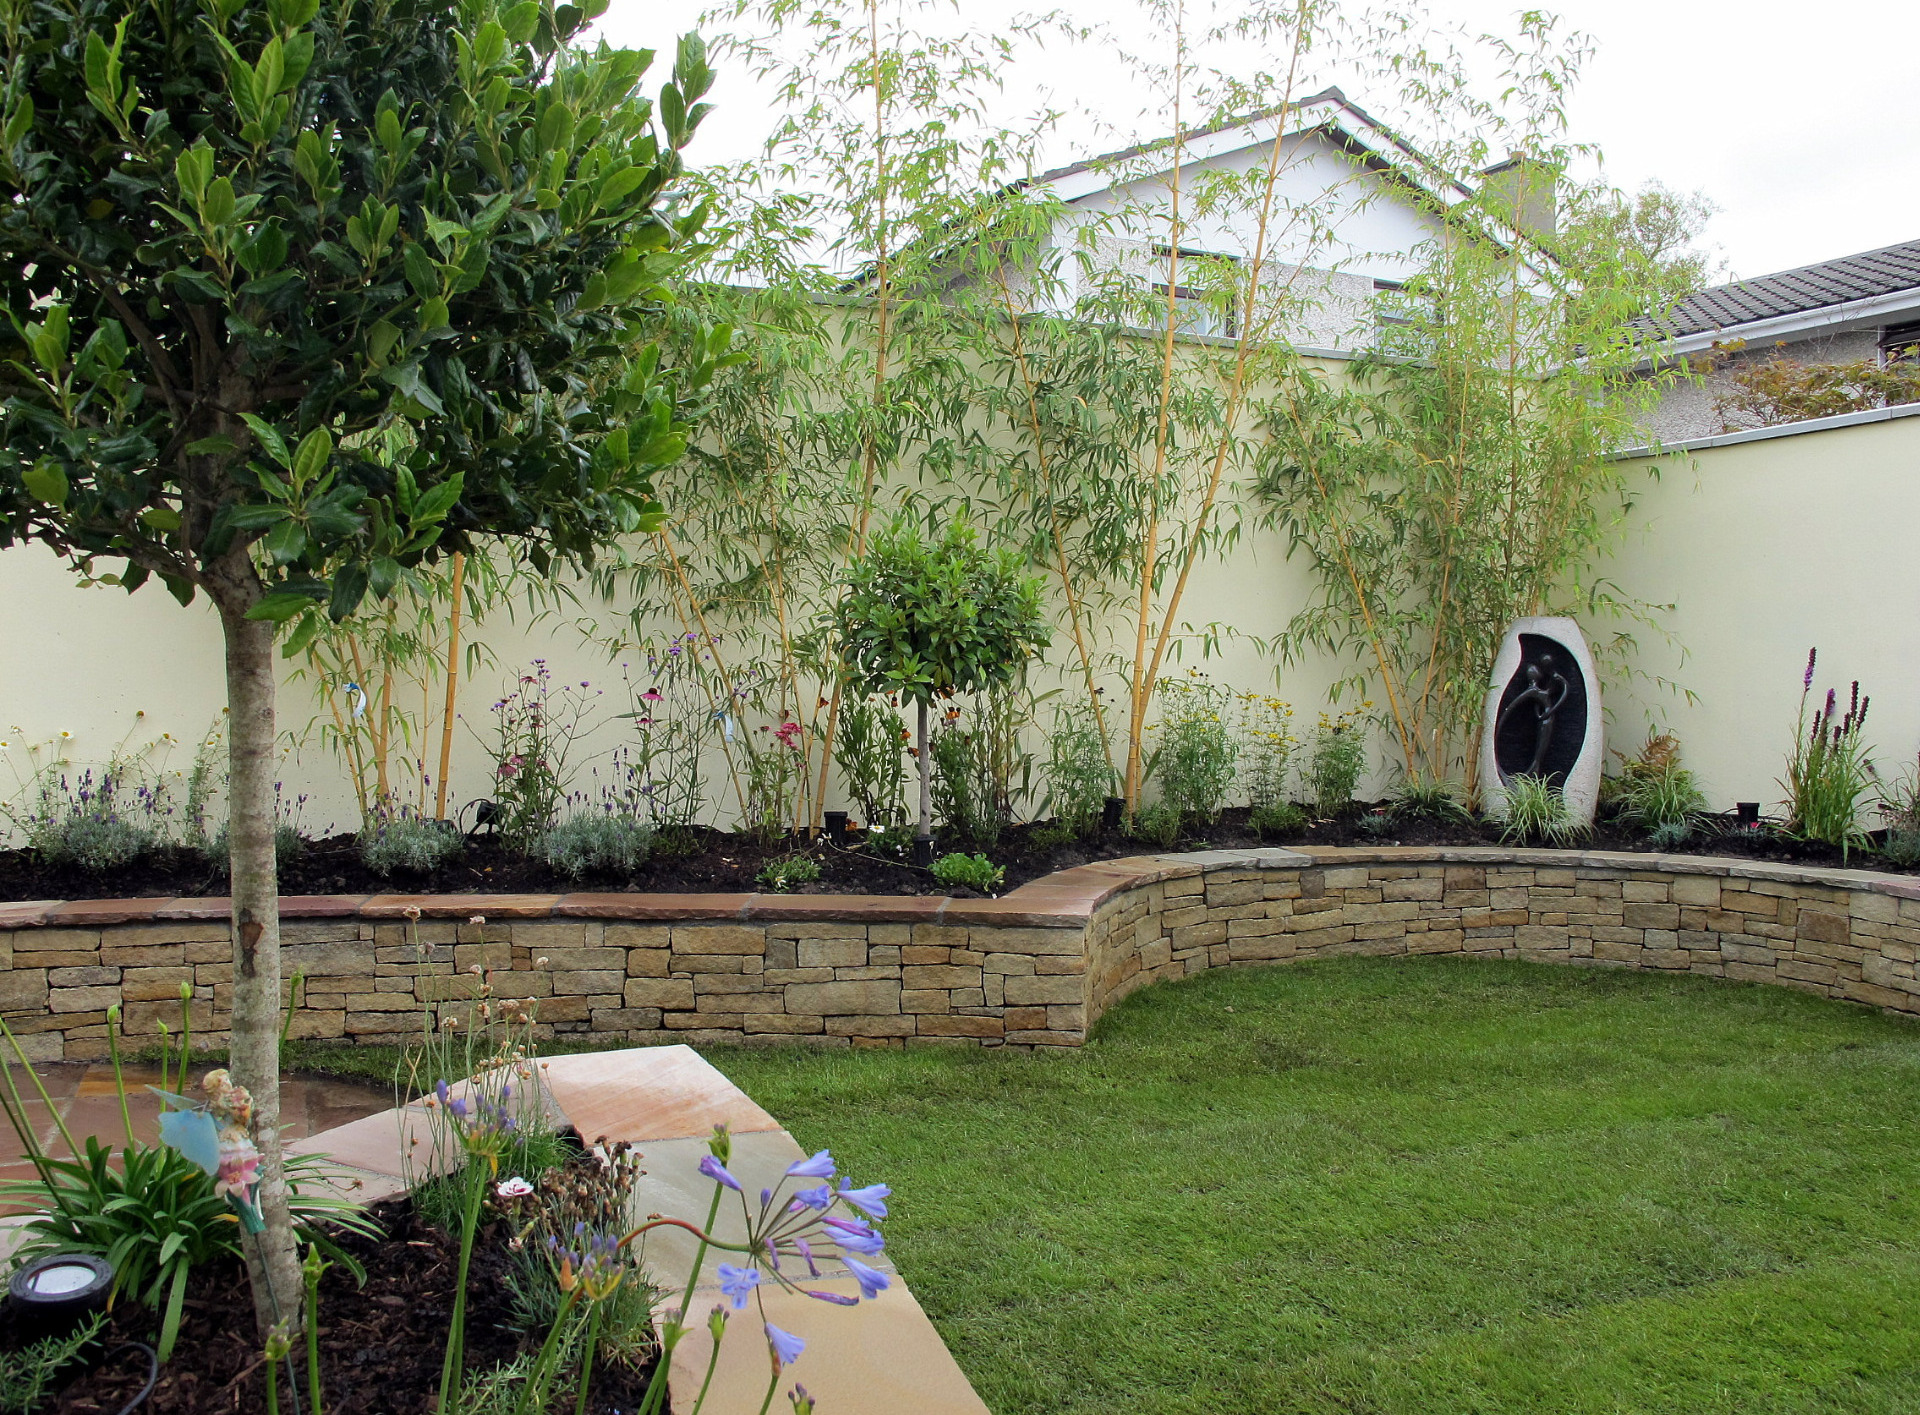 Bespoke raised planter beds in natural stone finish | Stillorgan, Co Dublin